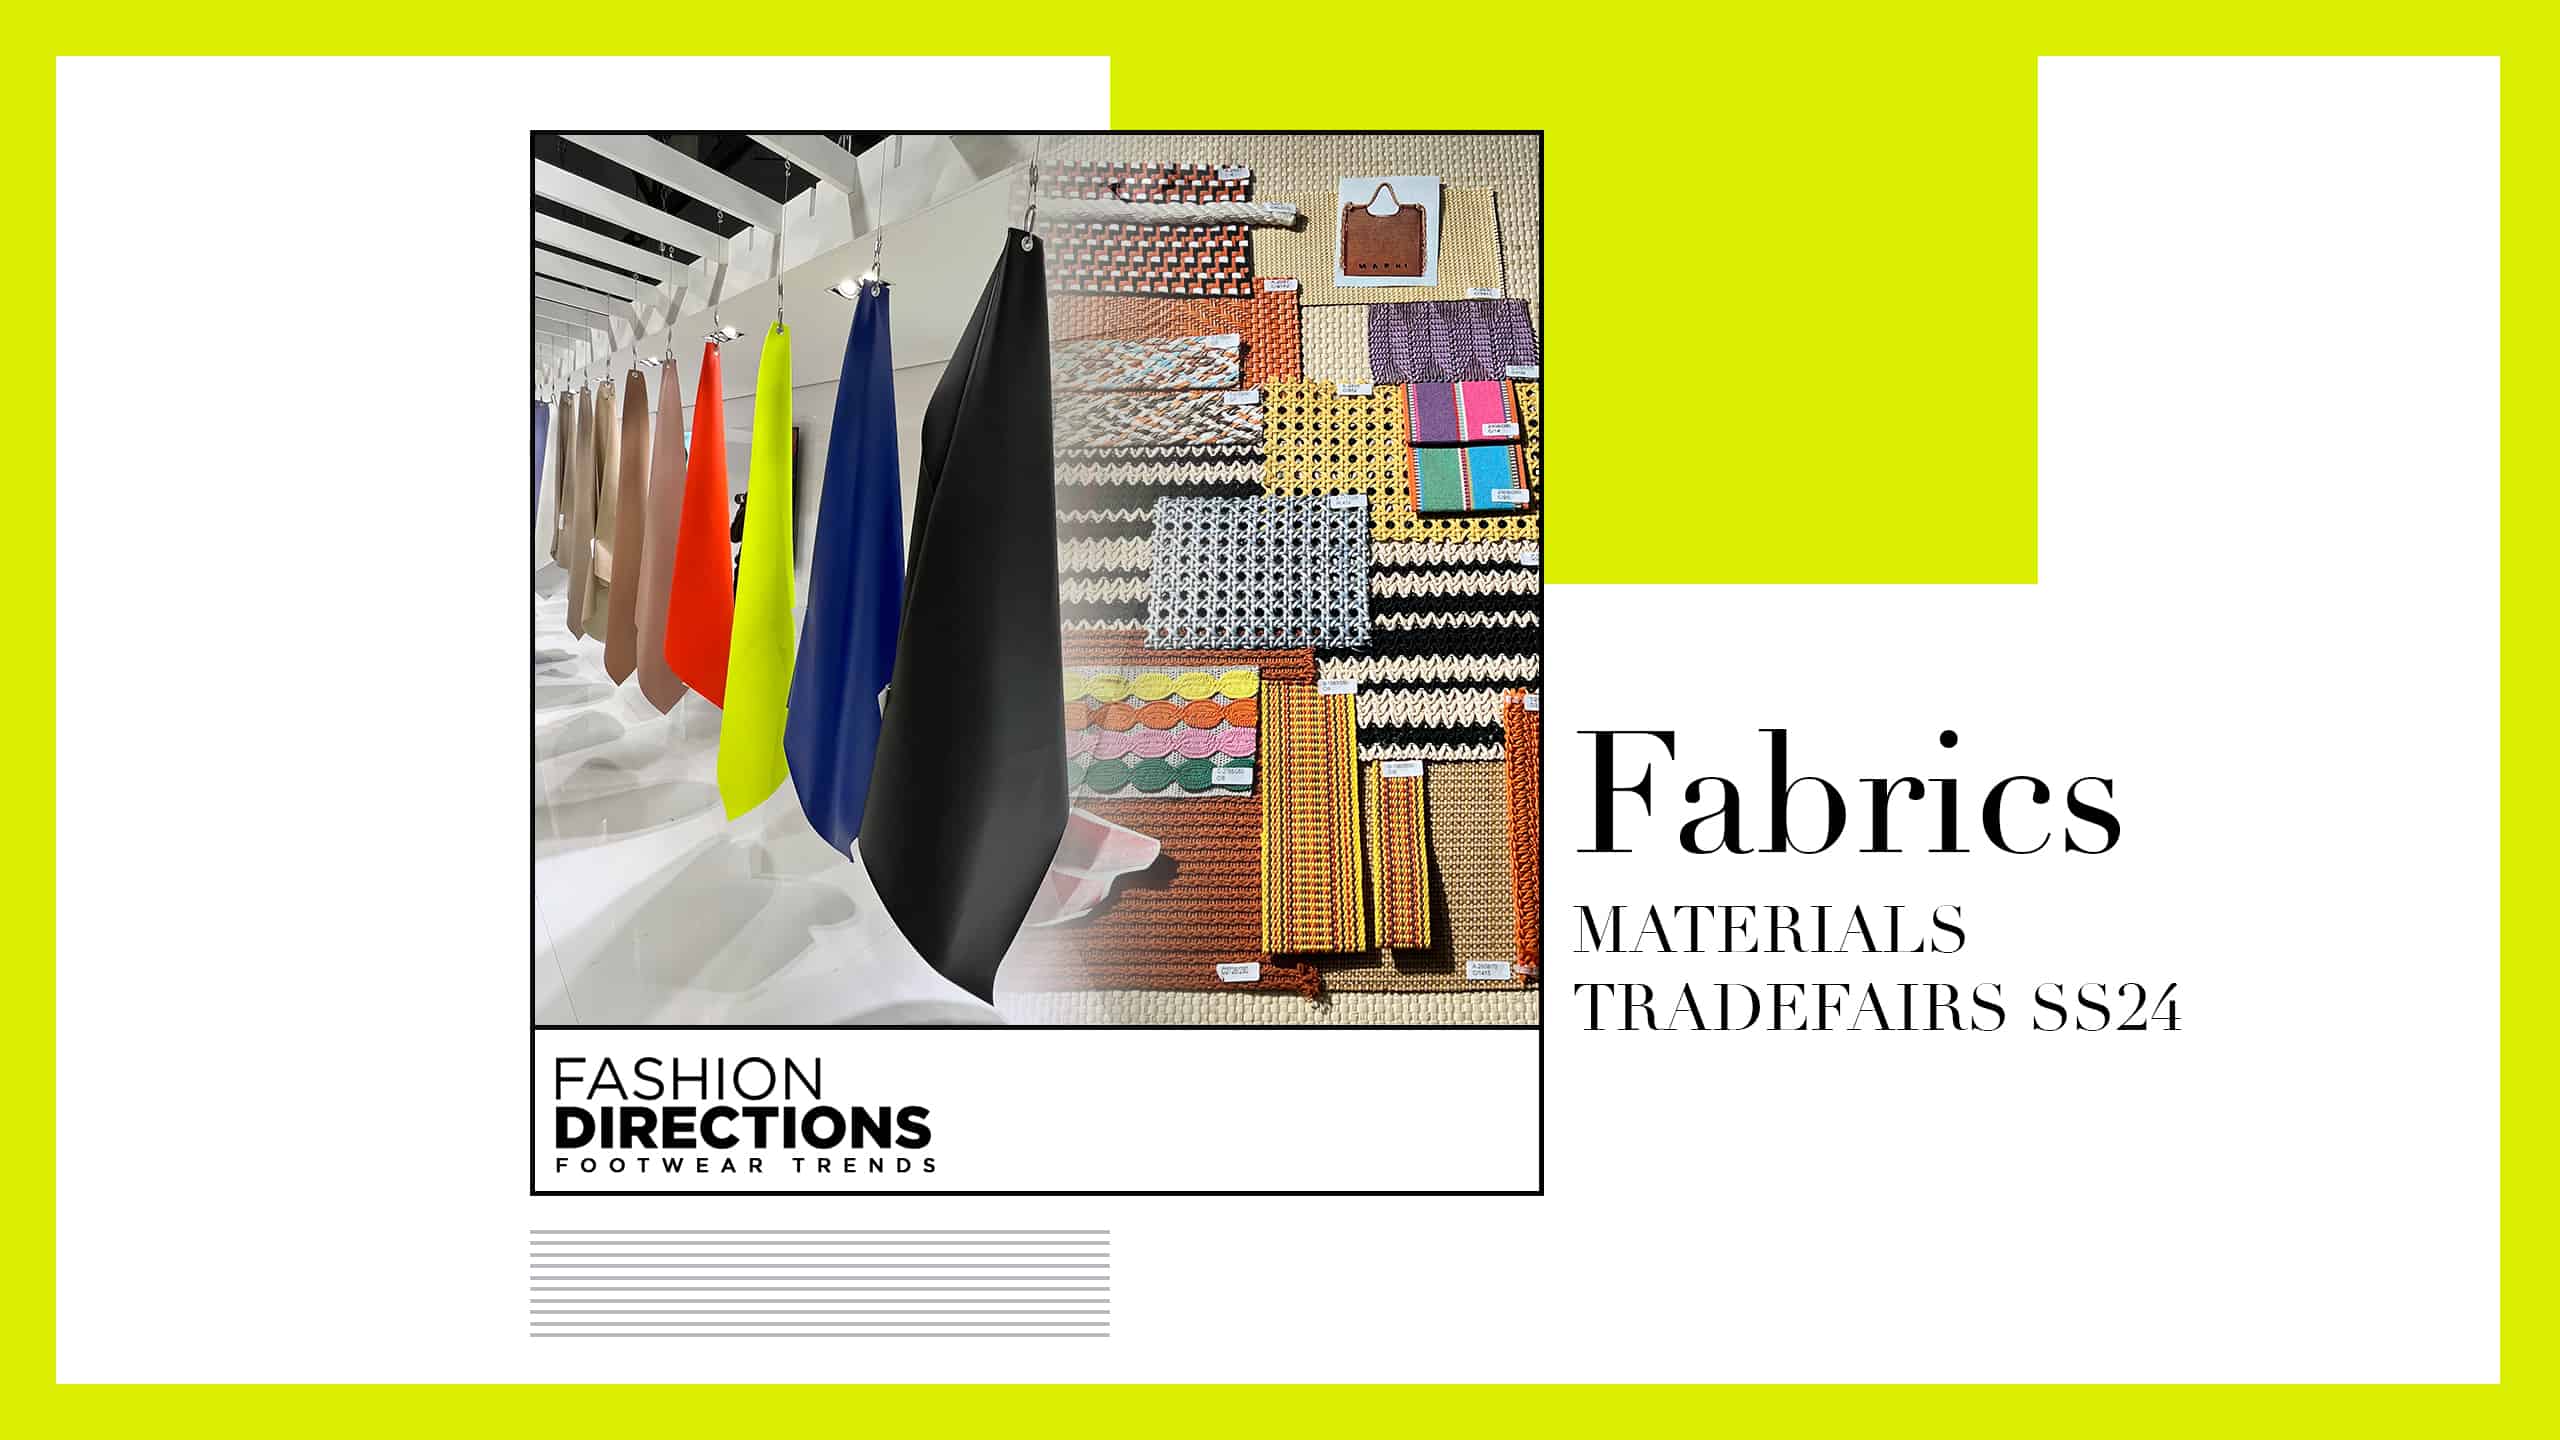 Fabrics Materials tradefairs ss24